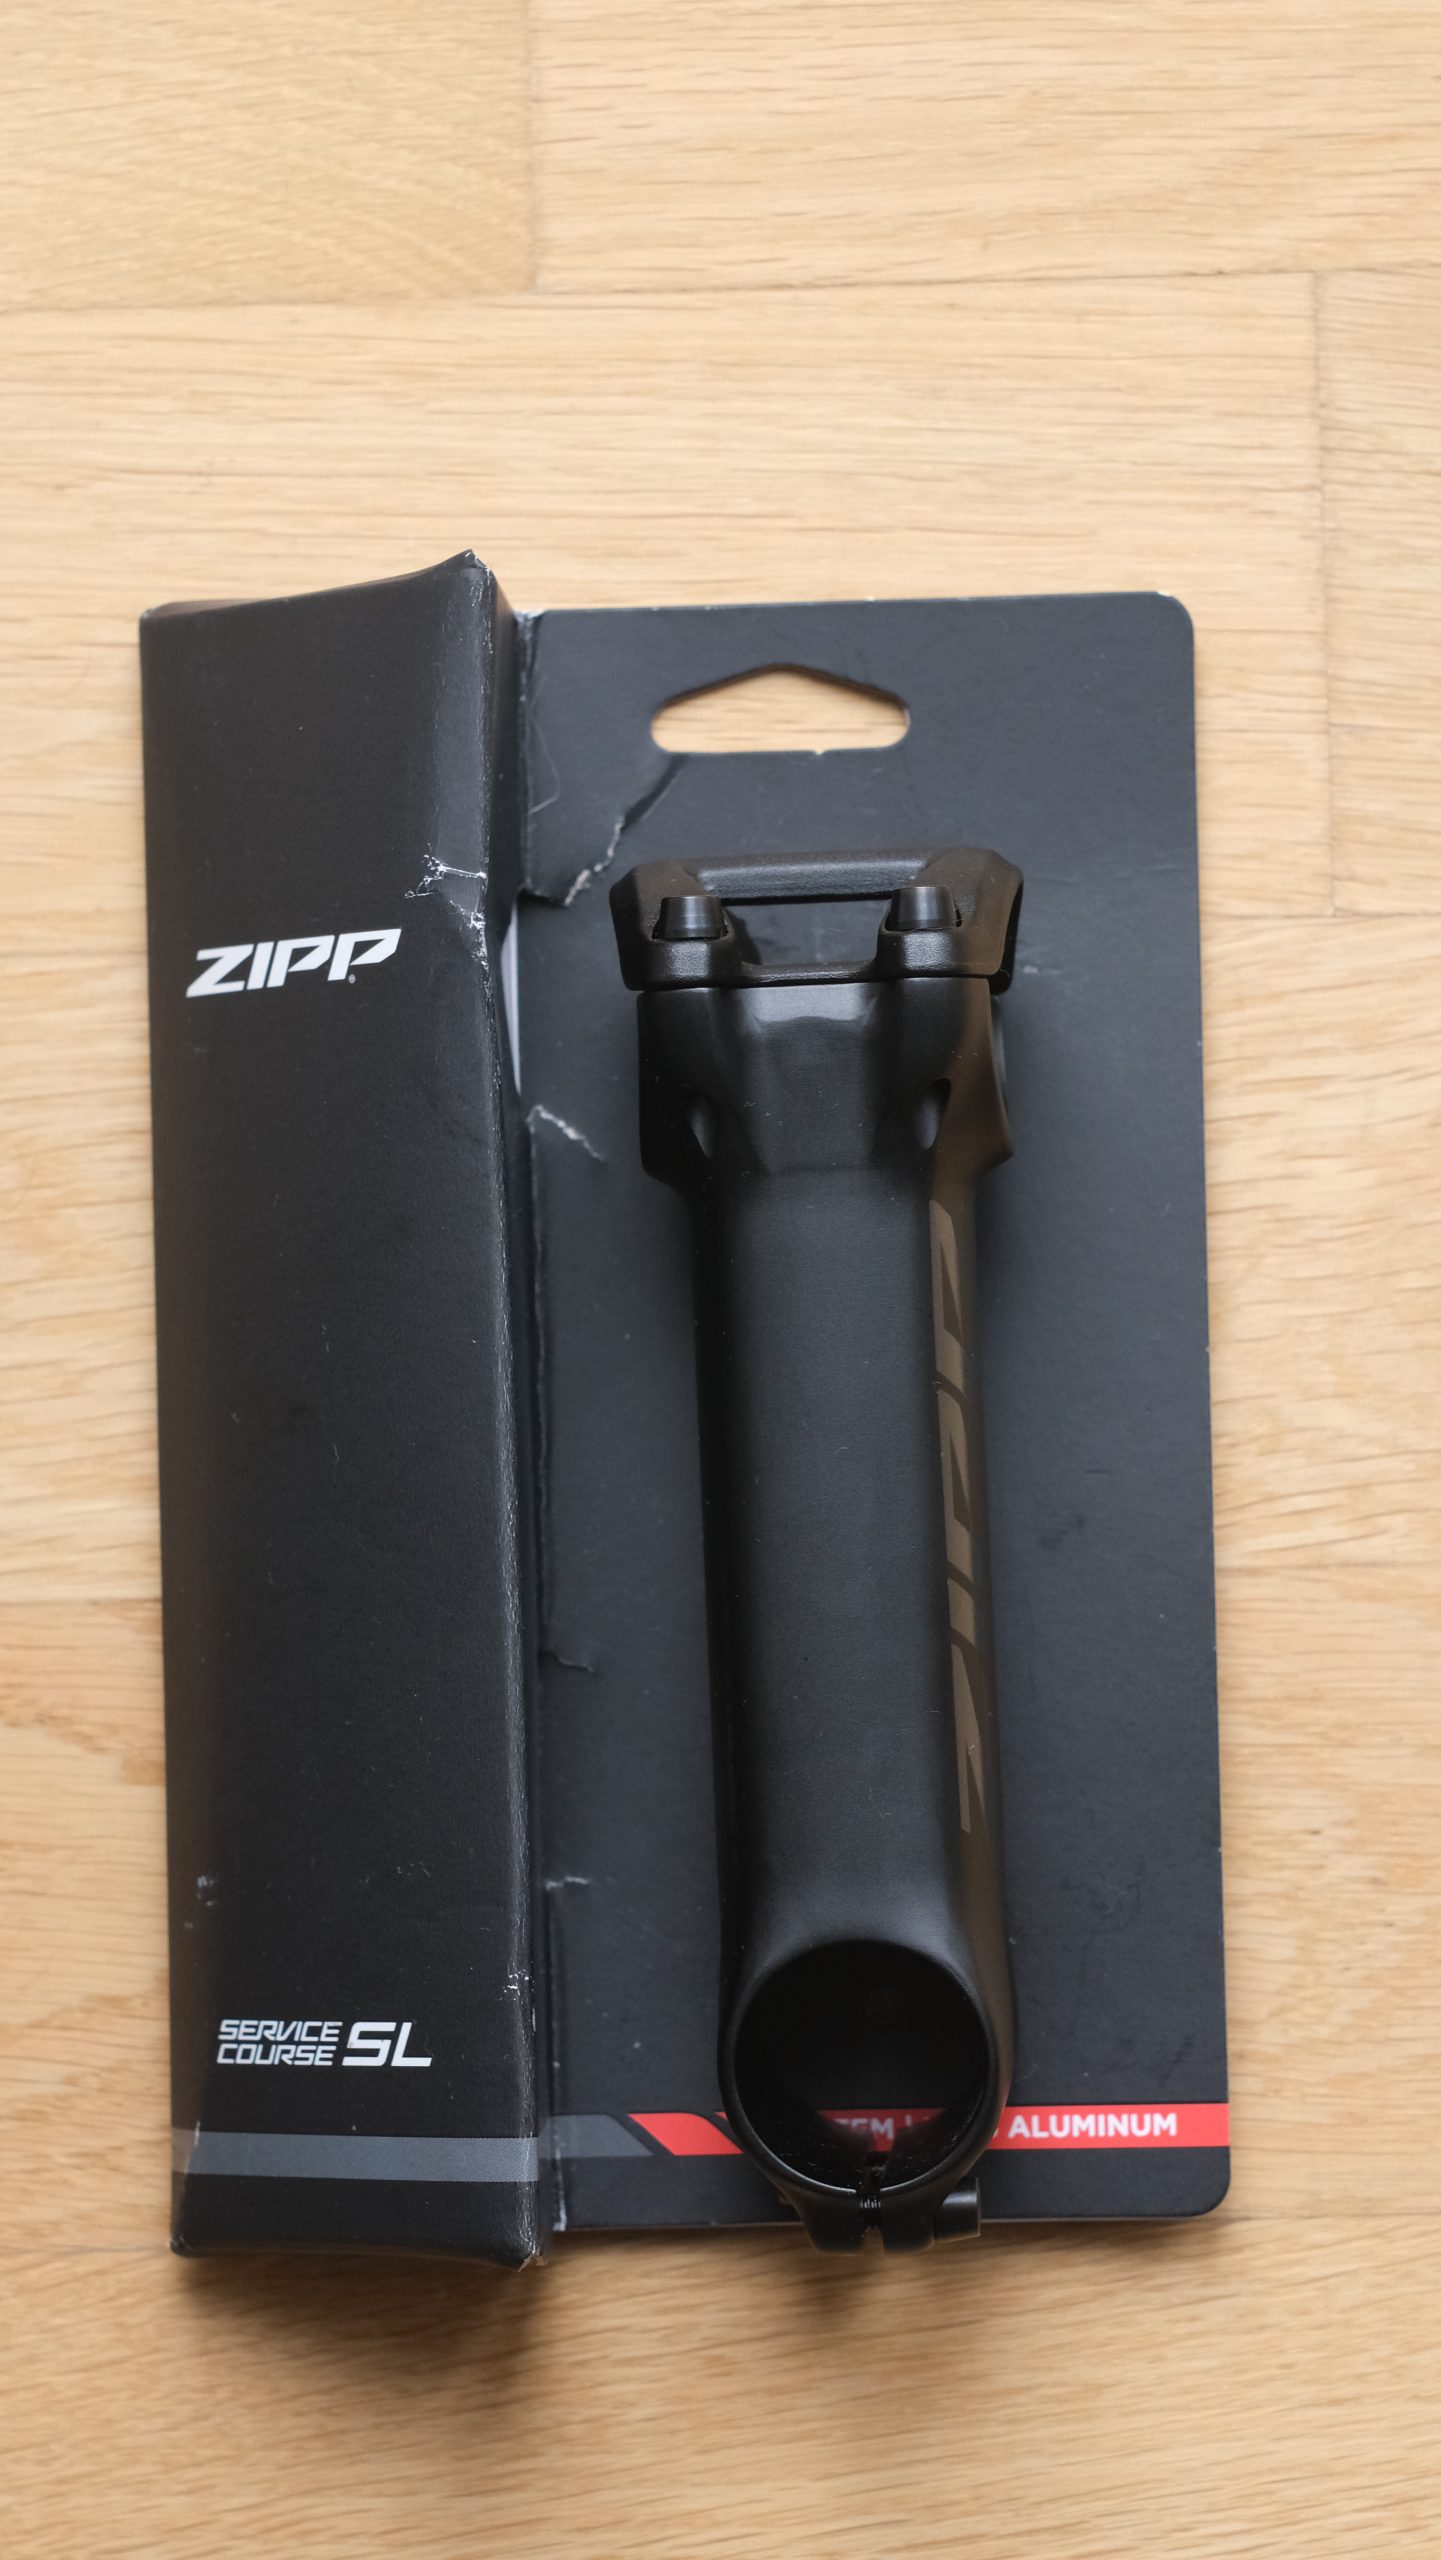 Zipp Service Course SL Stem - 120mm +/- 6° - New in box